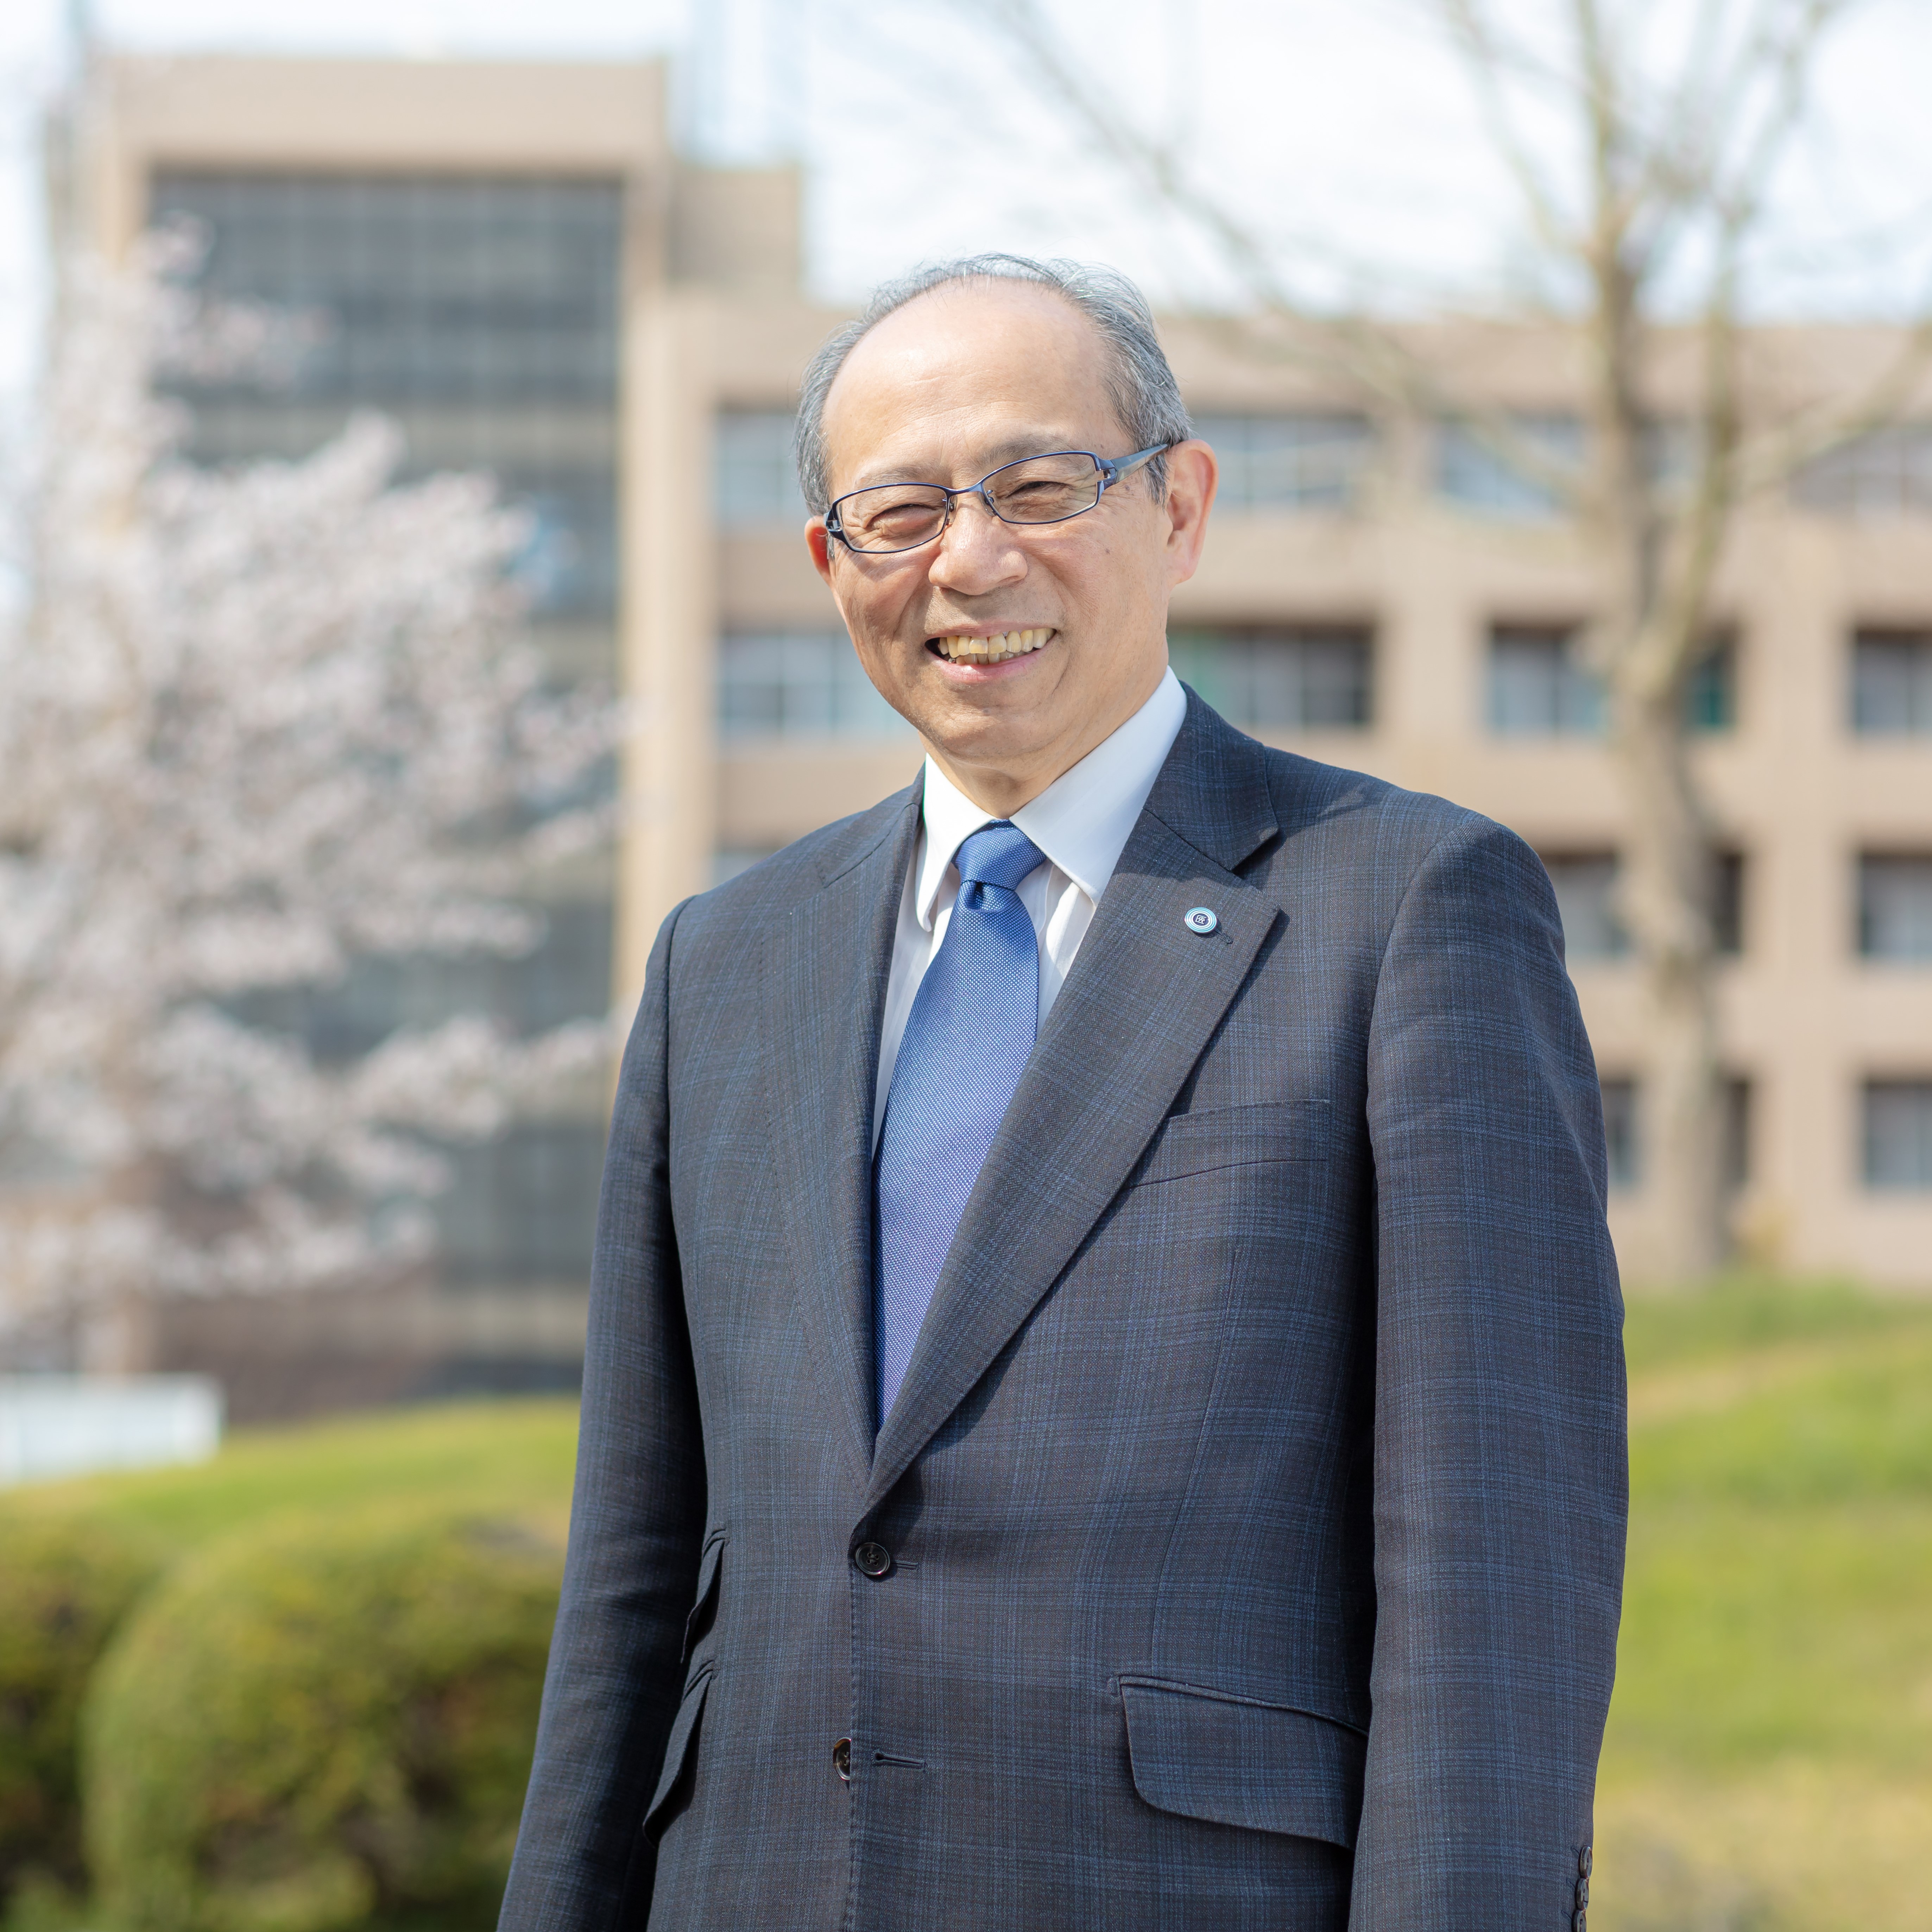 Picture: President Shinji Uemoto